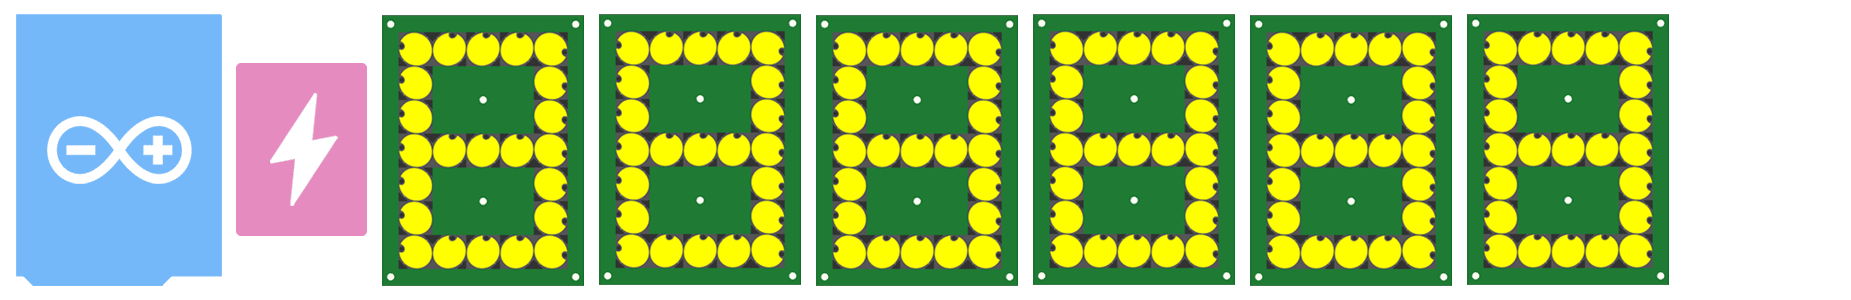 arduino-6x7-seg-flip-disc-psps-module.png